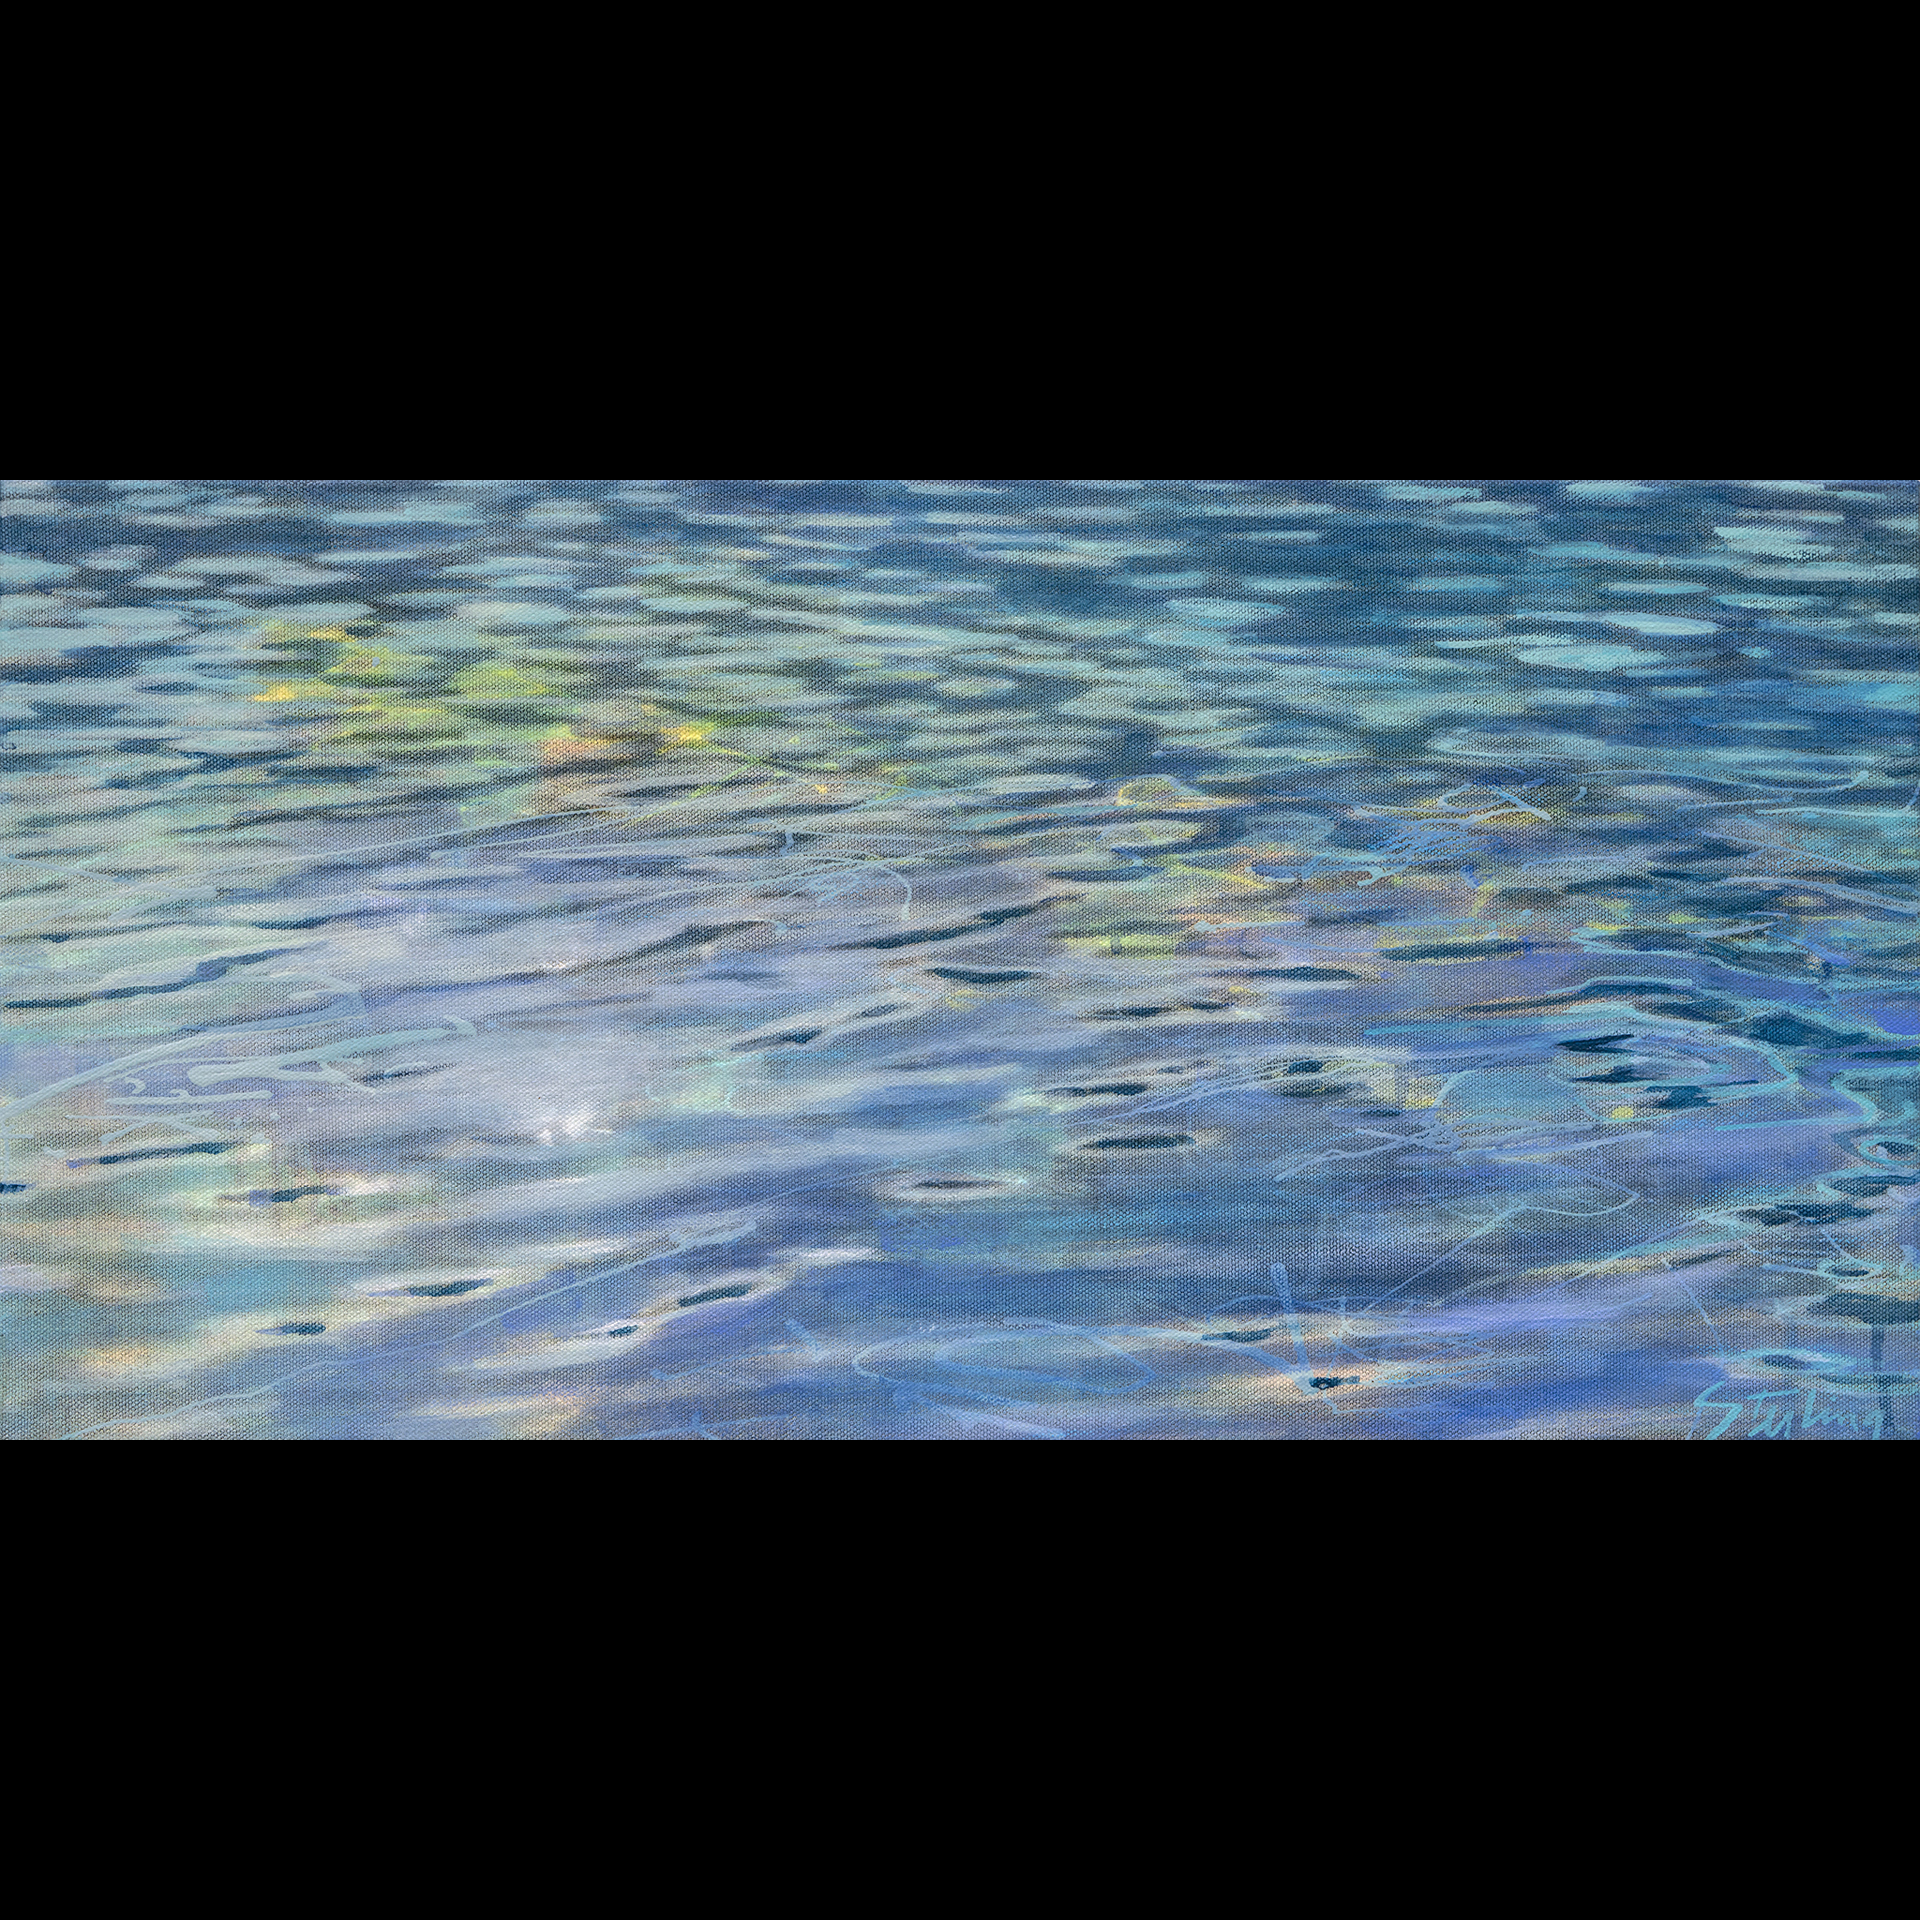 Moonlight Swim
12x24 acrylic on canvas
$700